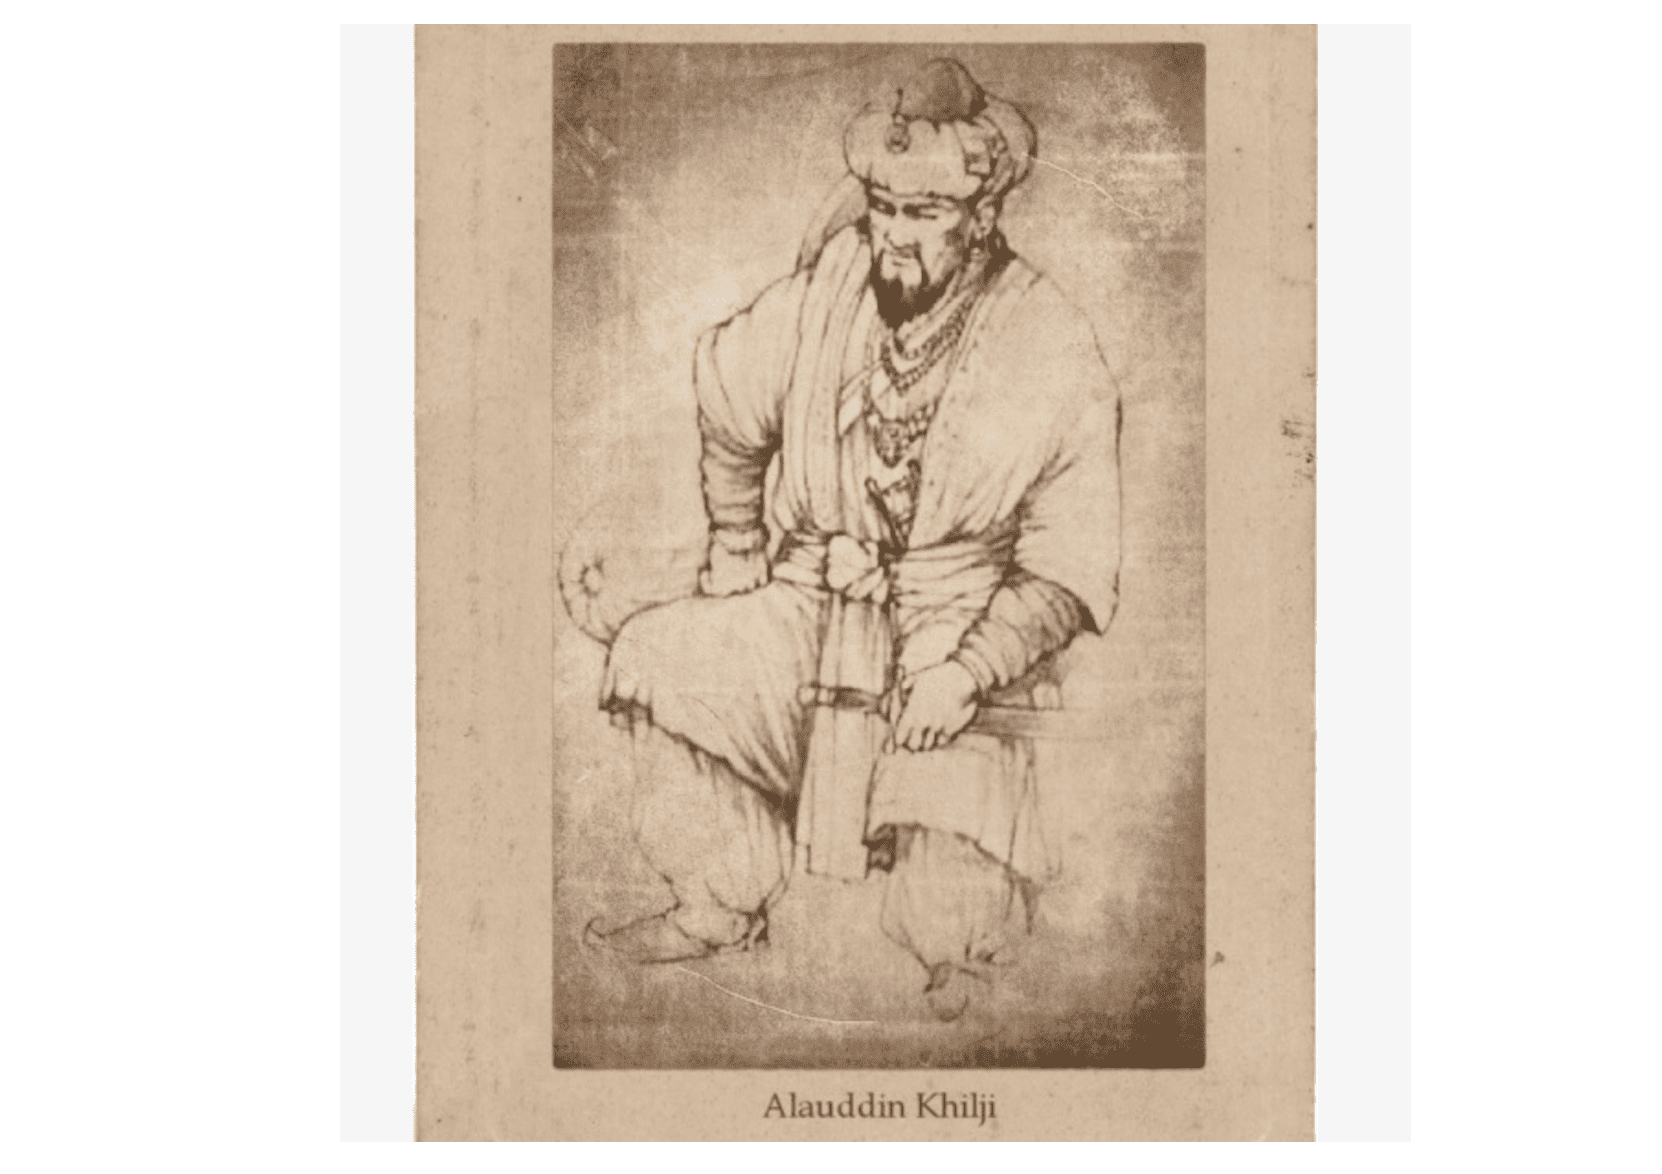 The Definitive Portrait of Alauddin Khilji